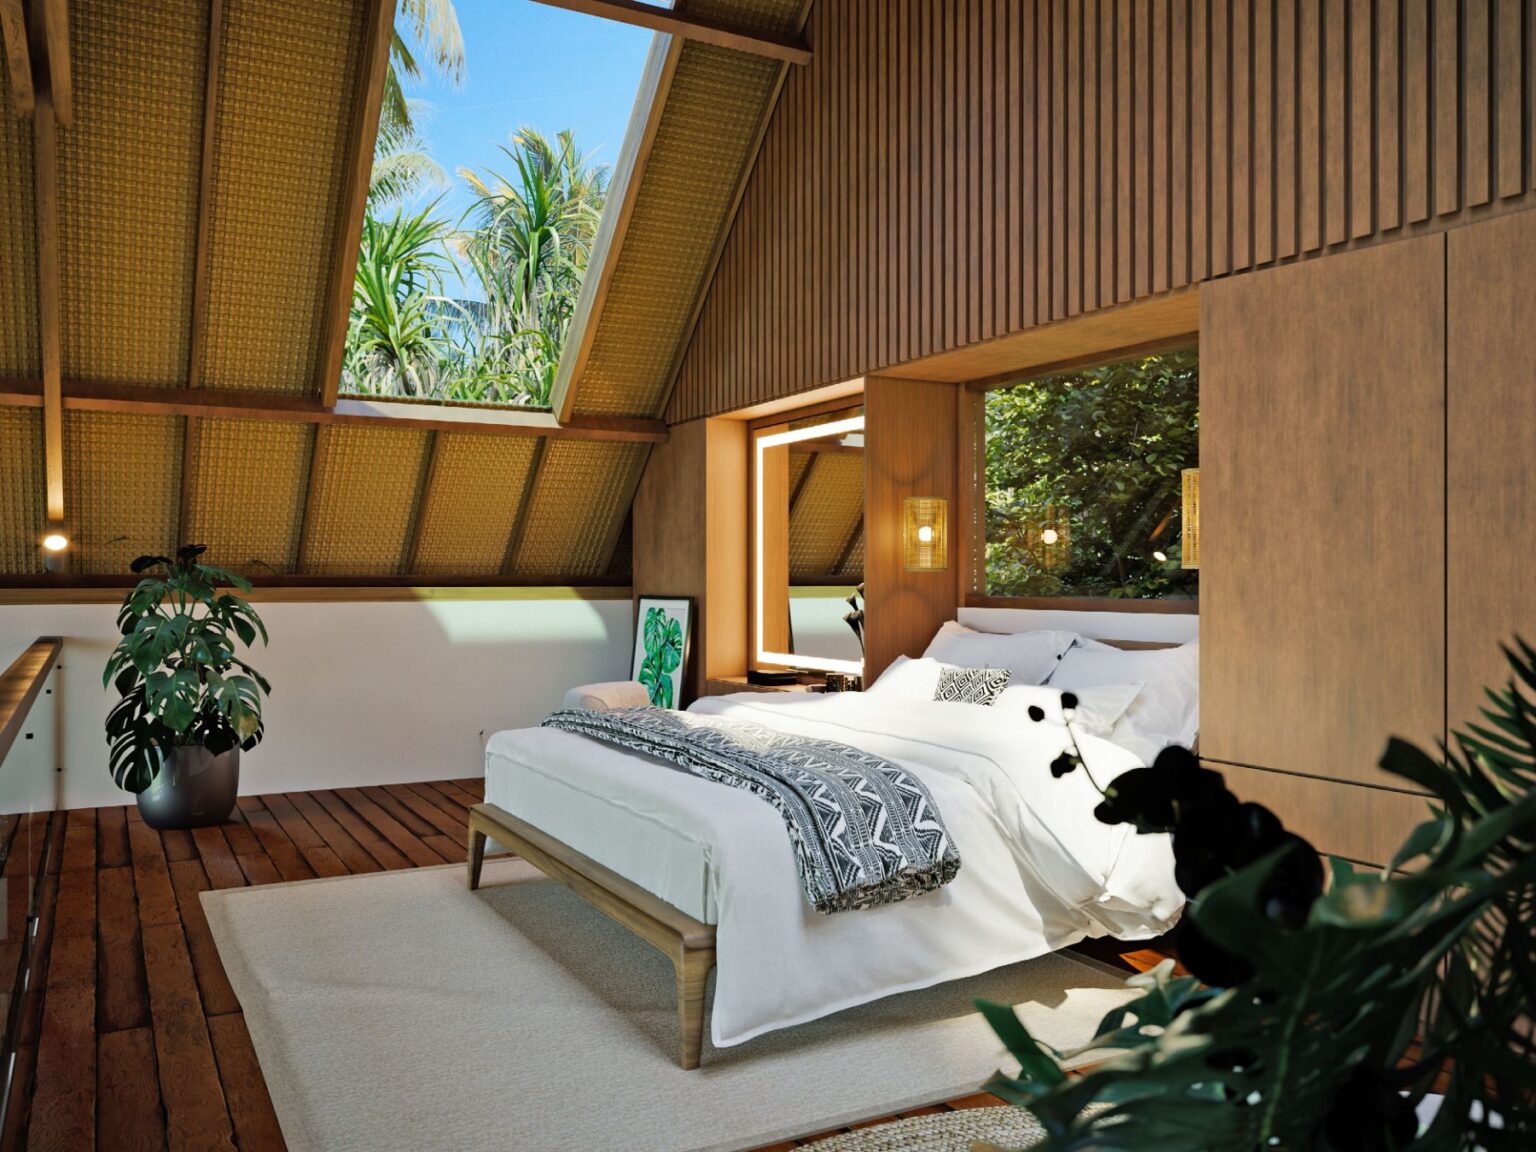 The Hut - Architecture Design by Balitecture